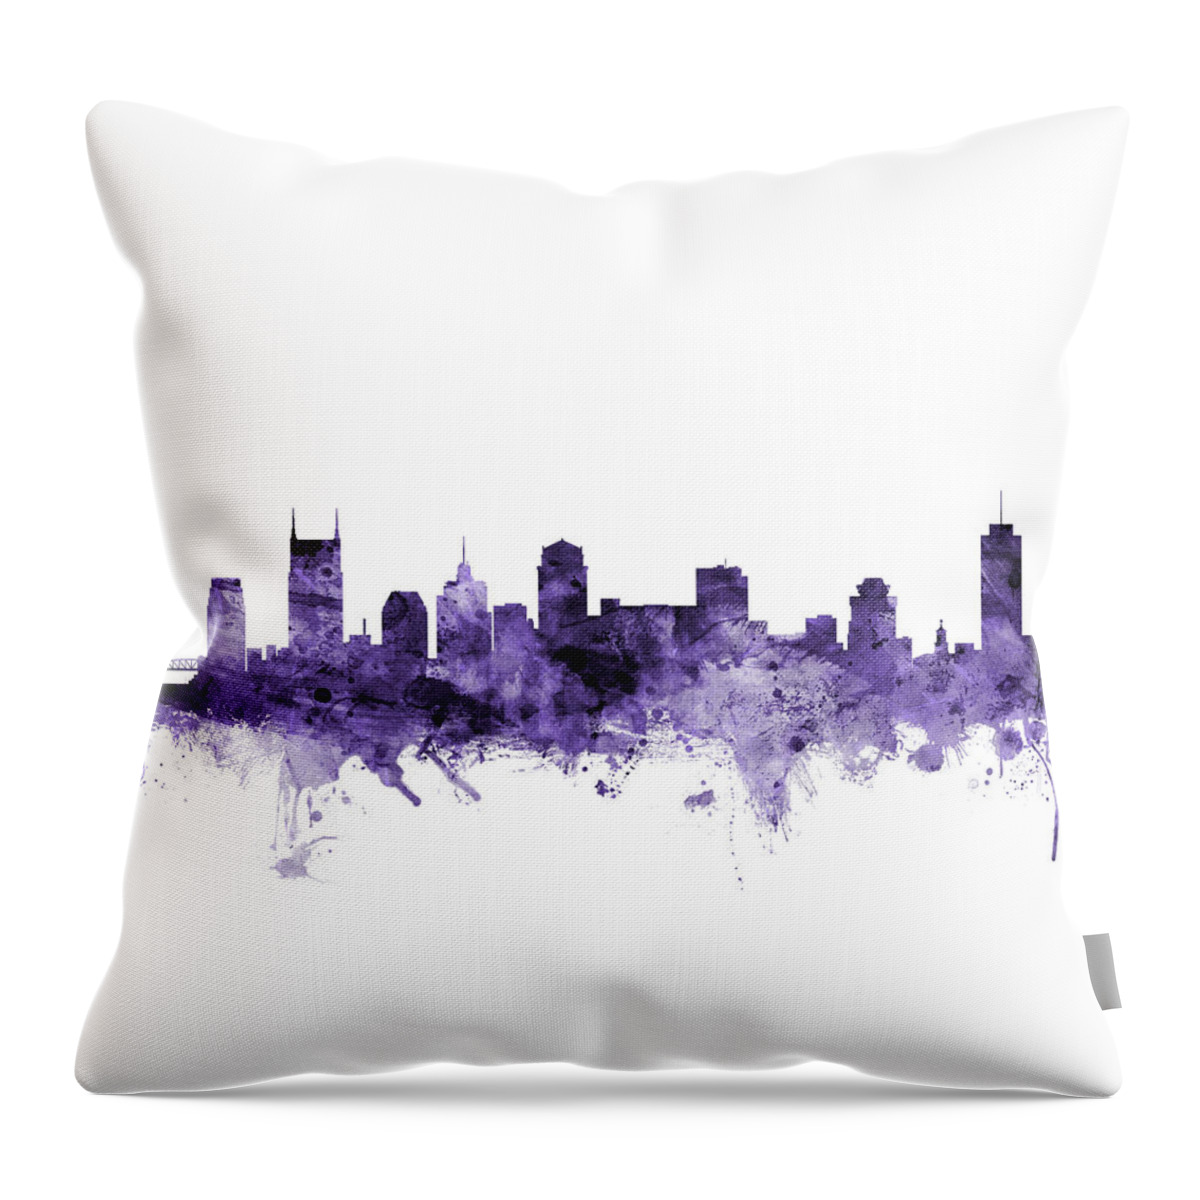 Nashville Throw Pillow featuring the digital art Nashville Tennessee Skyline by Michael Tompsett